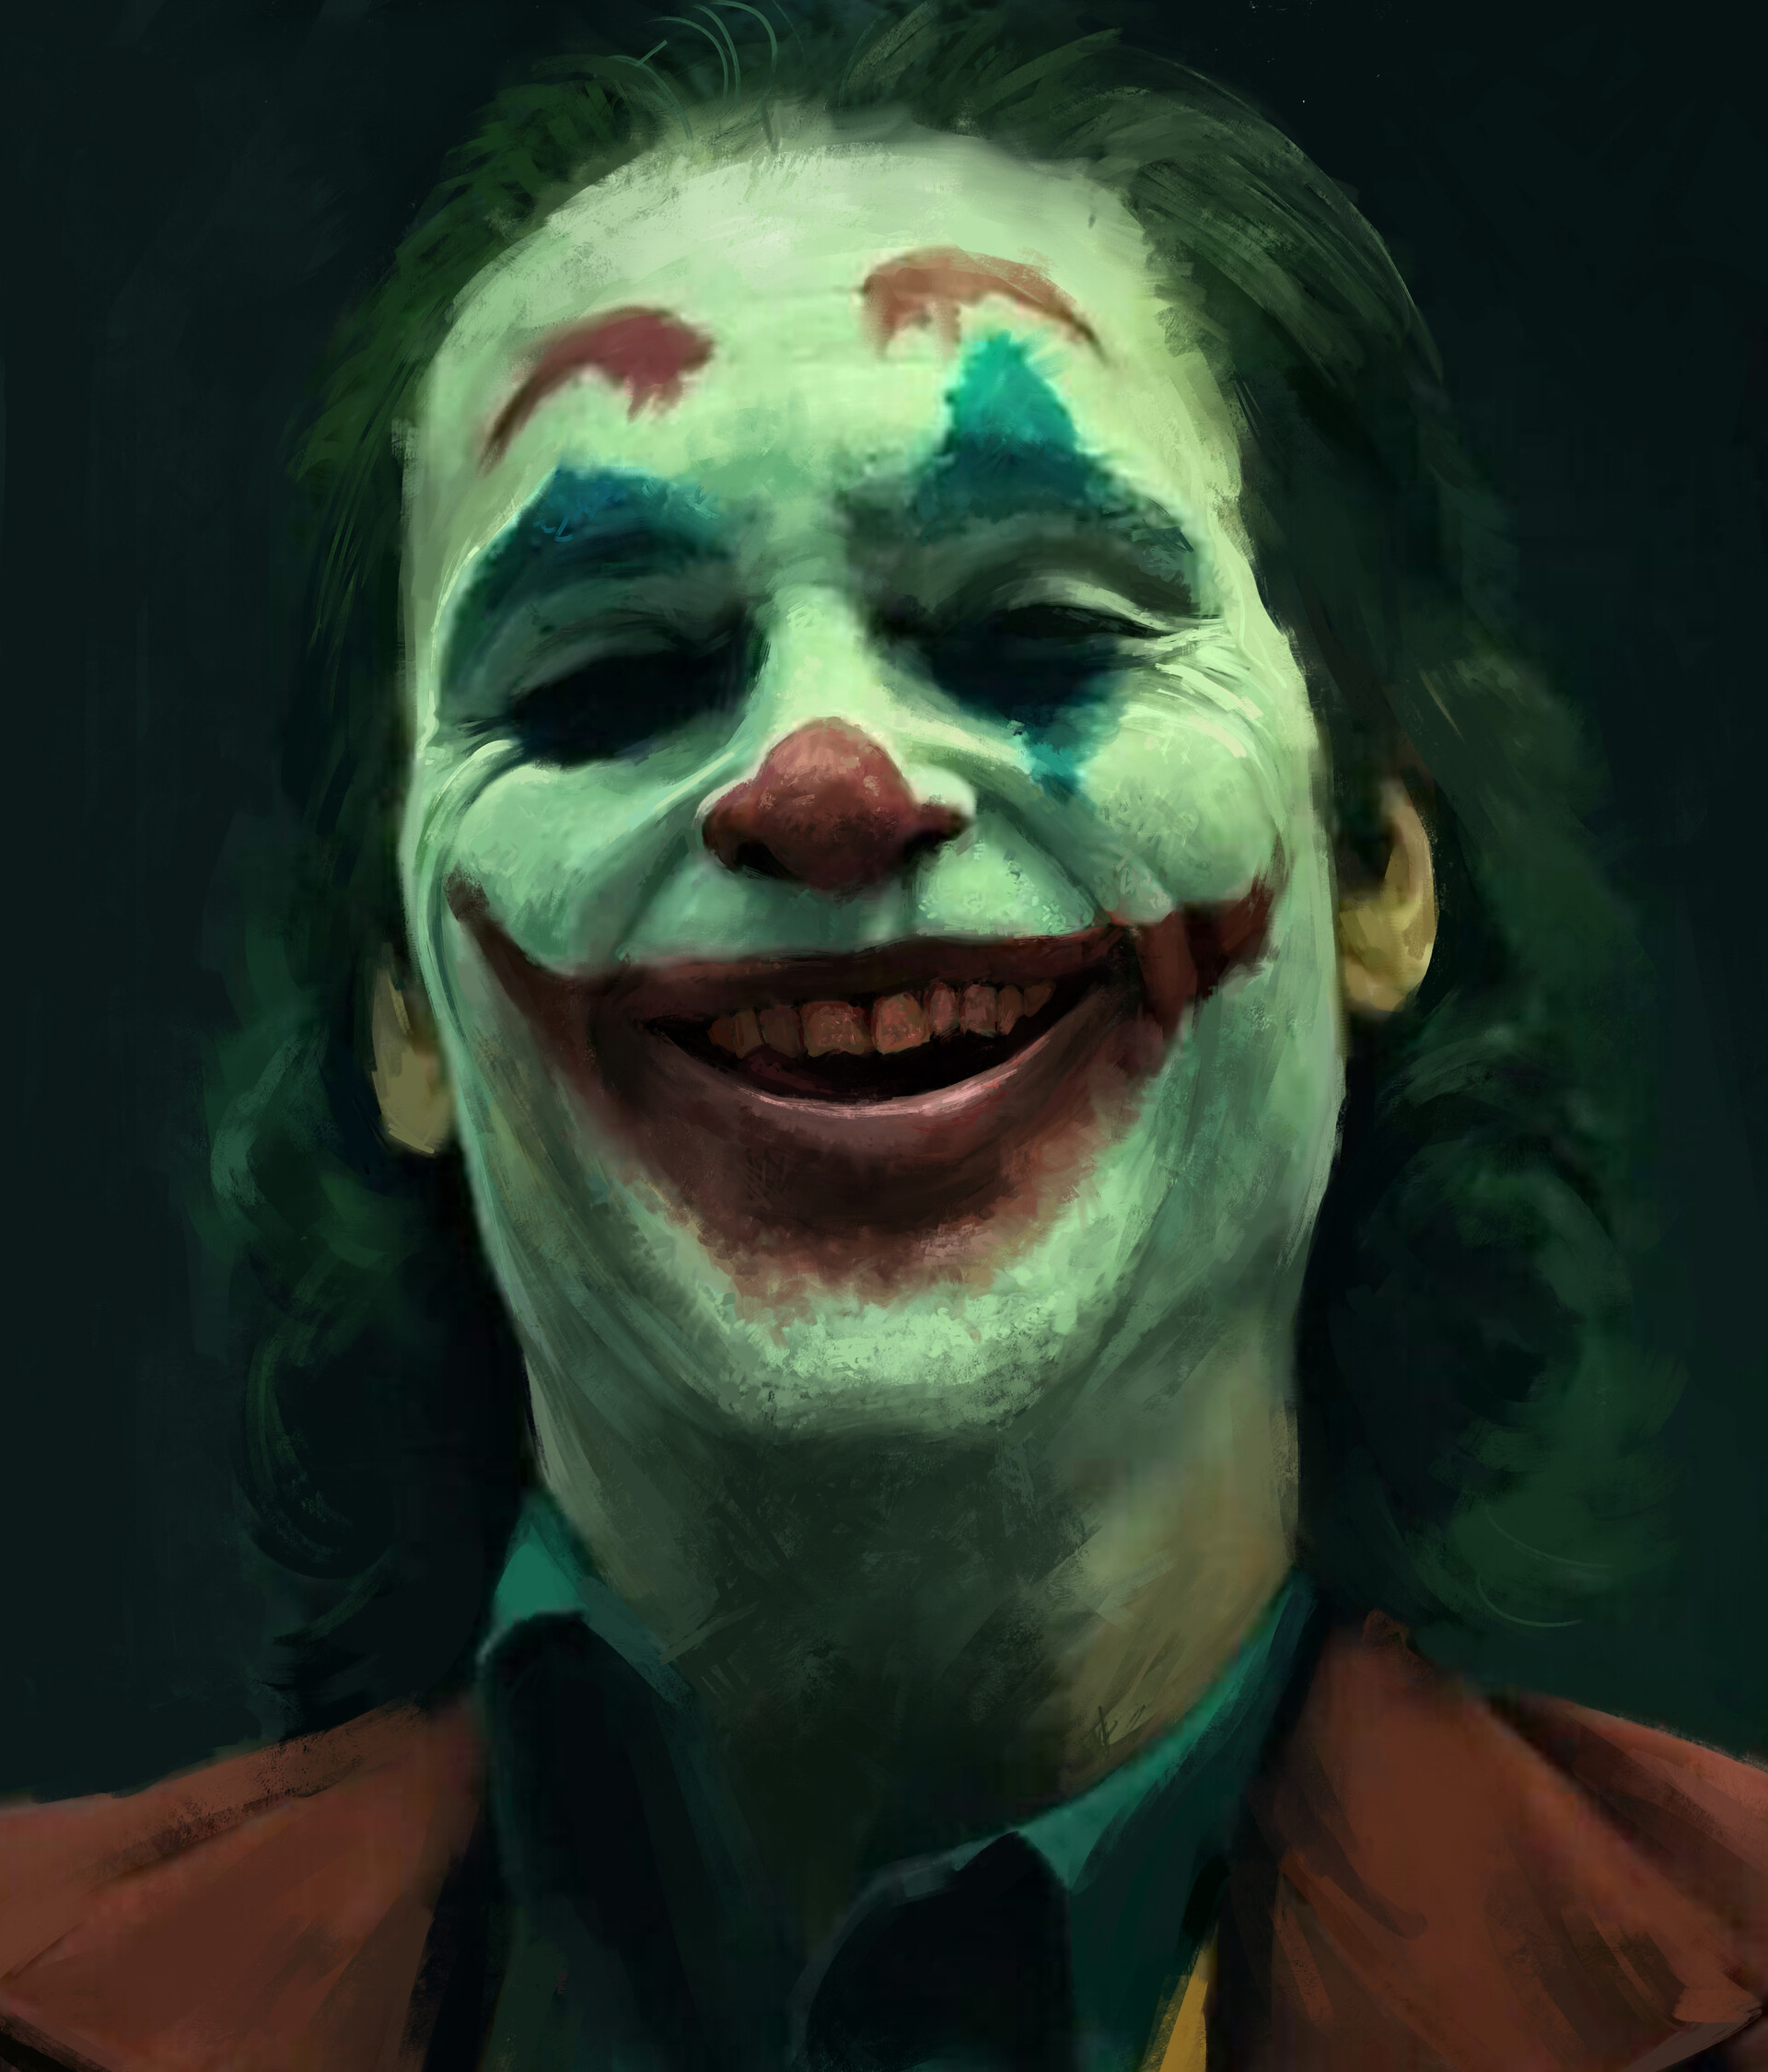 Digital Art Artwork Face Joker 2019 Movie Joker Joaquin Phoenix Laughing Makeup Shoichi Sugano Arthu 1920x2250